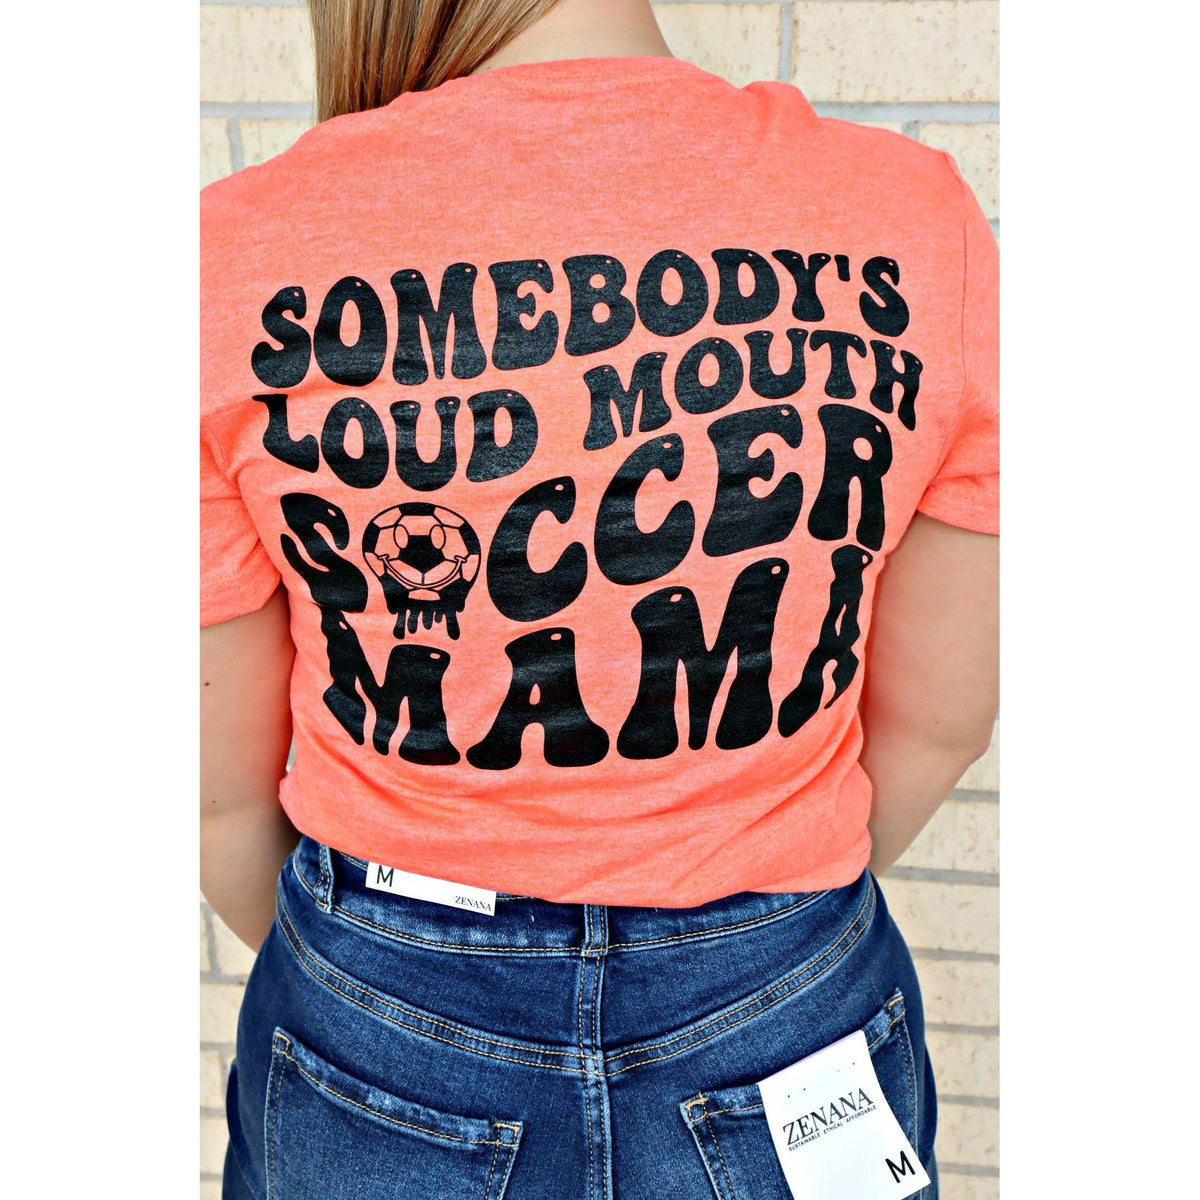 Somebody&#39;s Loud Mouth Soccer Mama Tee or Sweatshirt